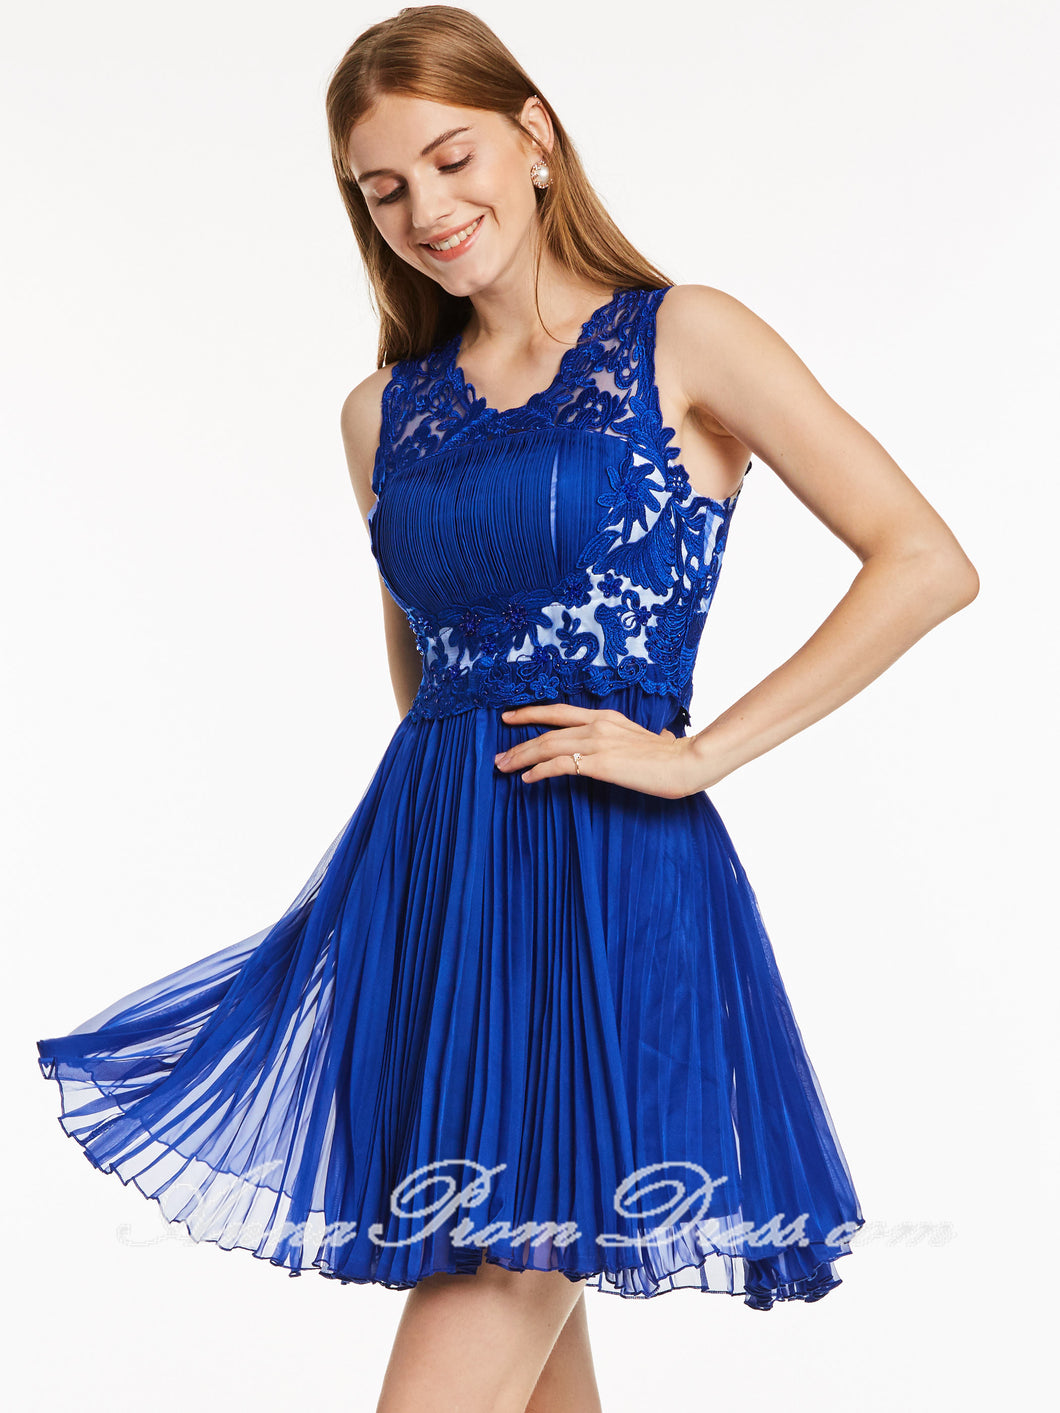 Sexy Homecoming Dress V Neck A Line Lace Royal Blue Short Prom Dress P Anna Promdress 8498